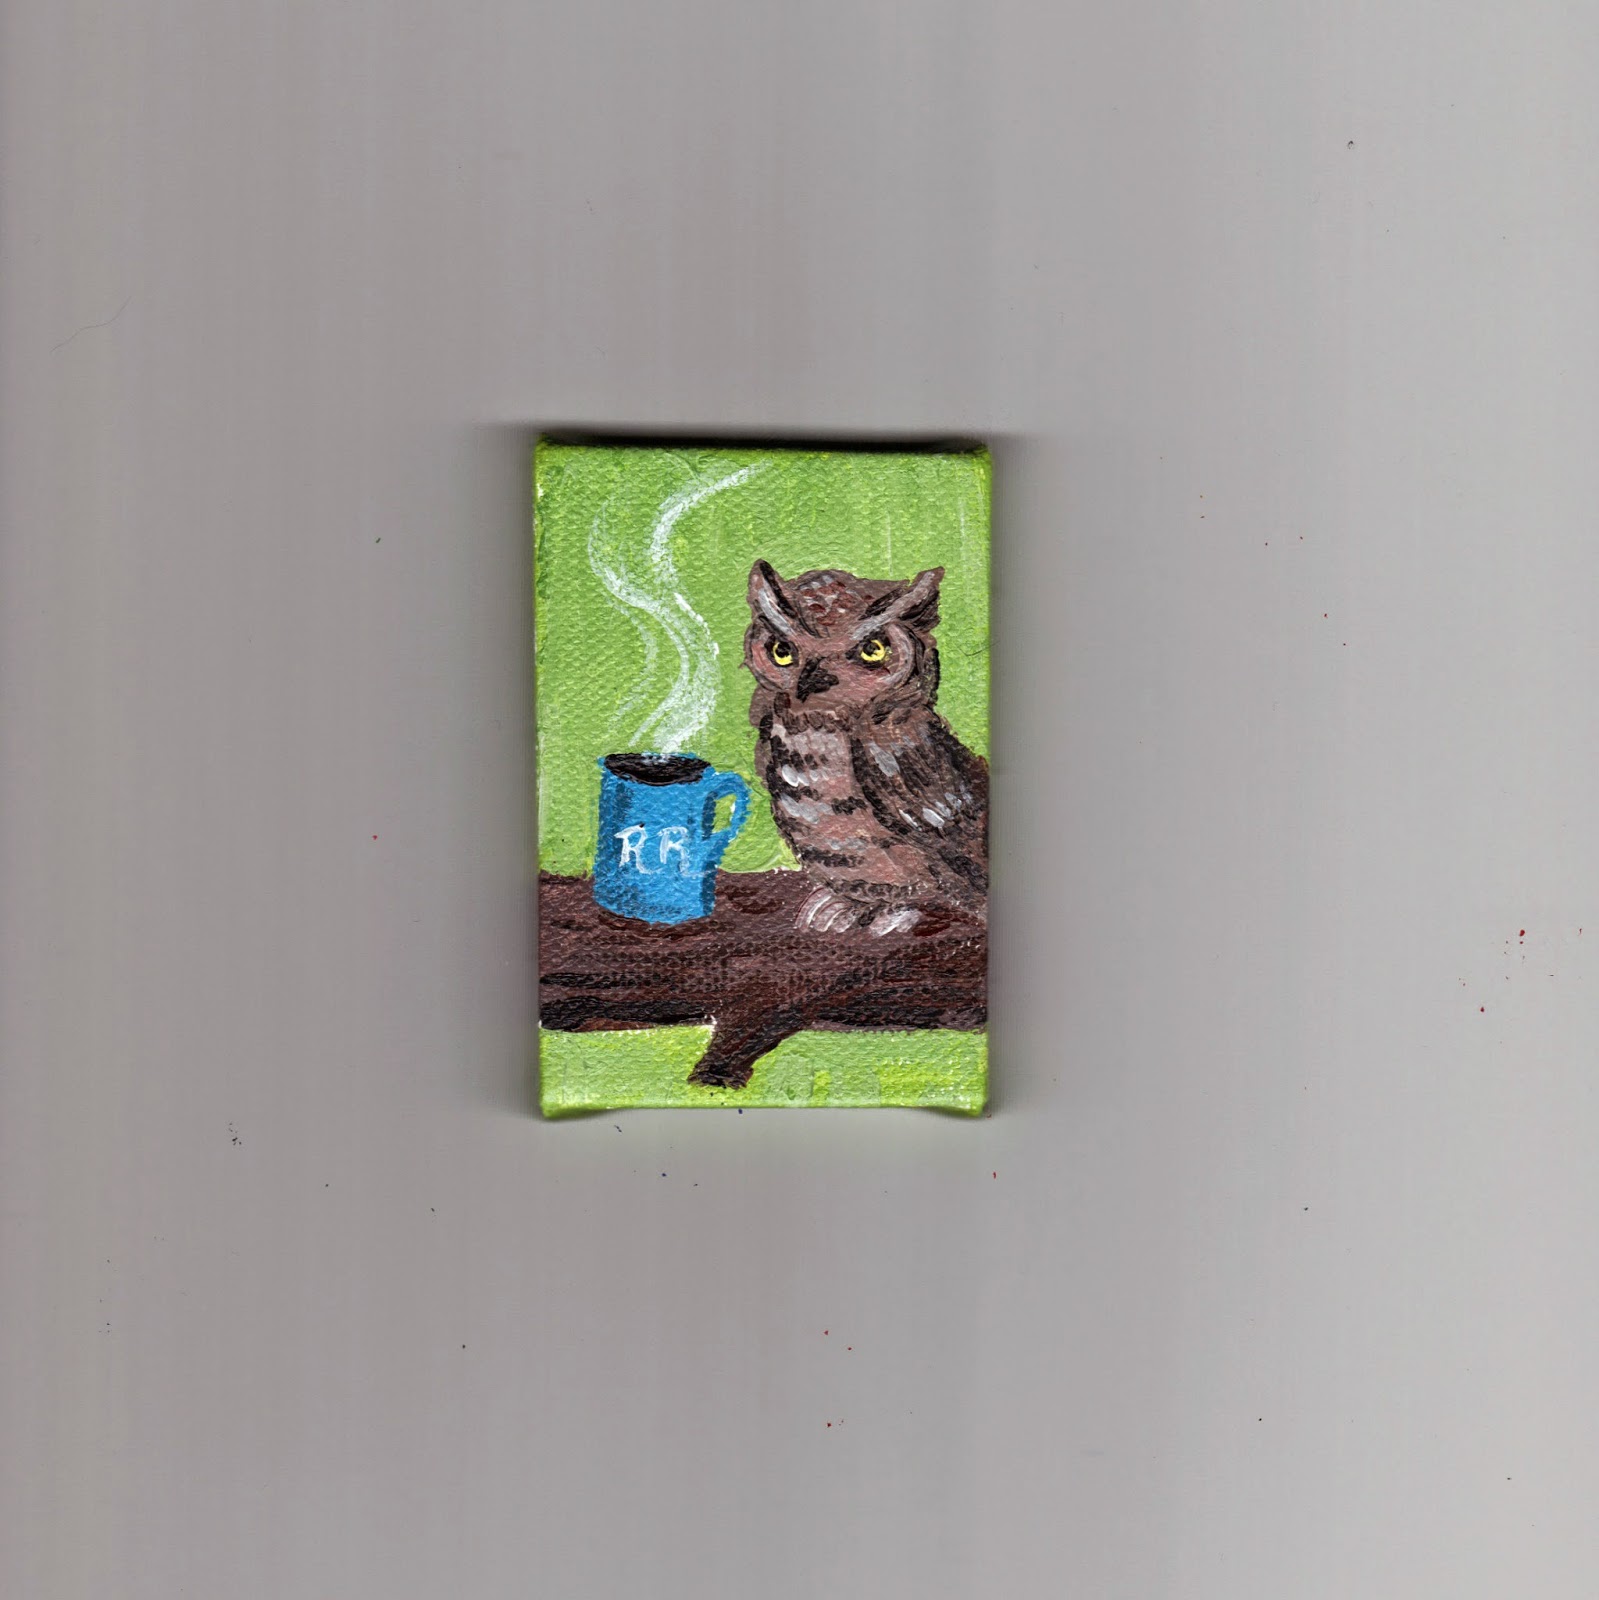 https://www.etsy.com/listing/186364078/miniature-art-twin-peaks-owl-coffee-rr?ref=listing-shop-header-1